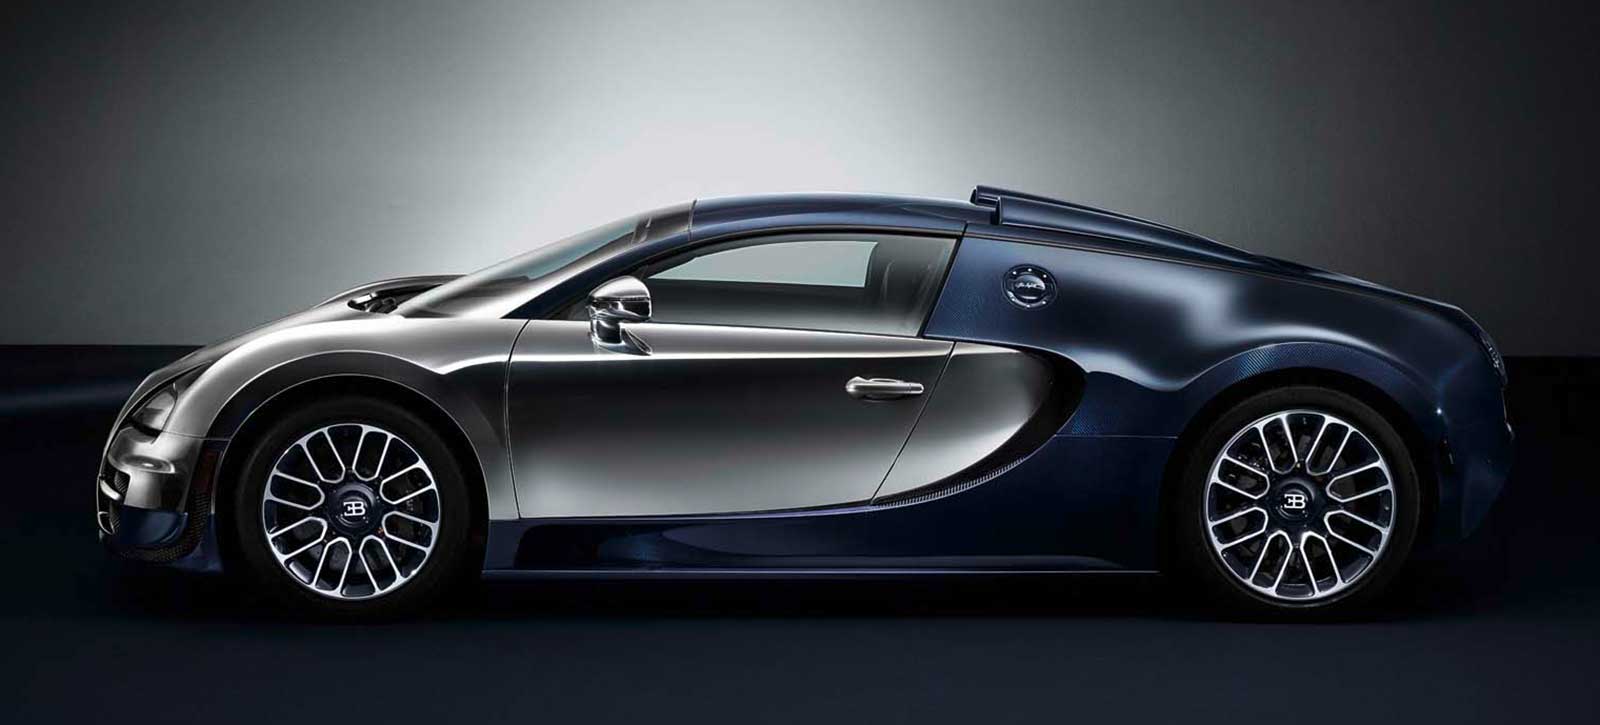 Bugatti, Bugatti-Veyron-Ettore-Bugatti-Edition-Side-Angle: Nama “Ettore Bugatti” Digunakan Sebagai Nama Terakhir Bugatti Veyron